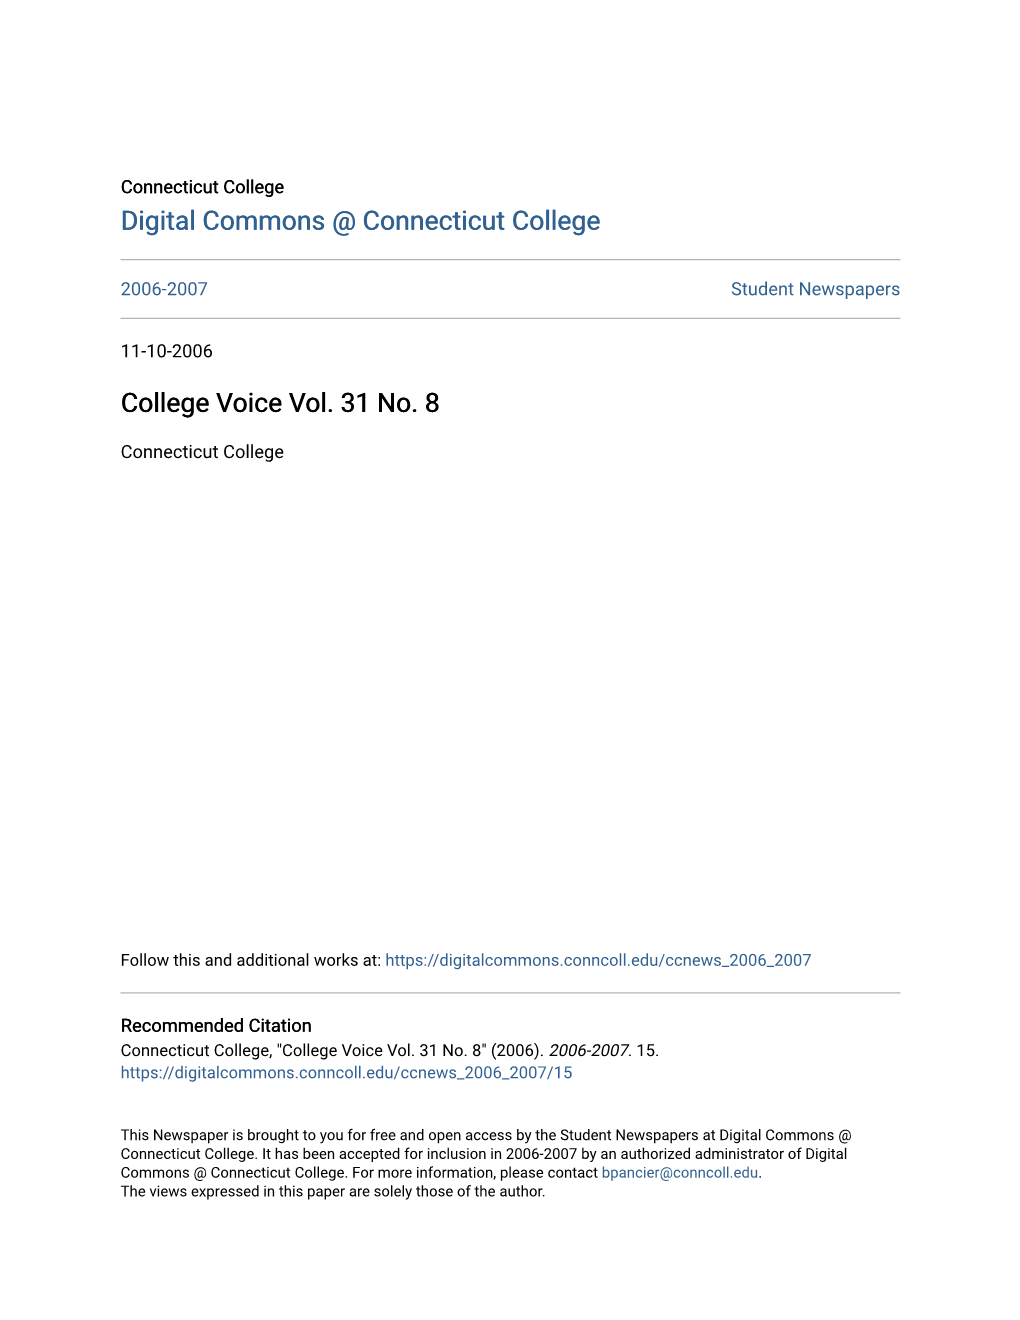 College Voice Vol. 31 No. 8